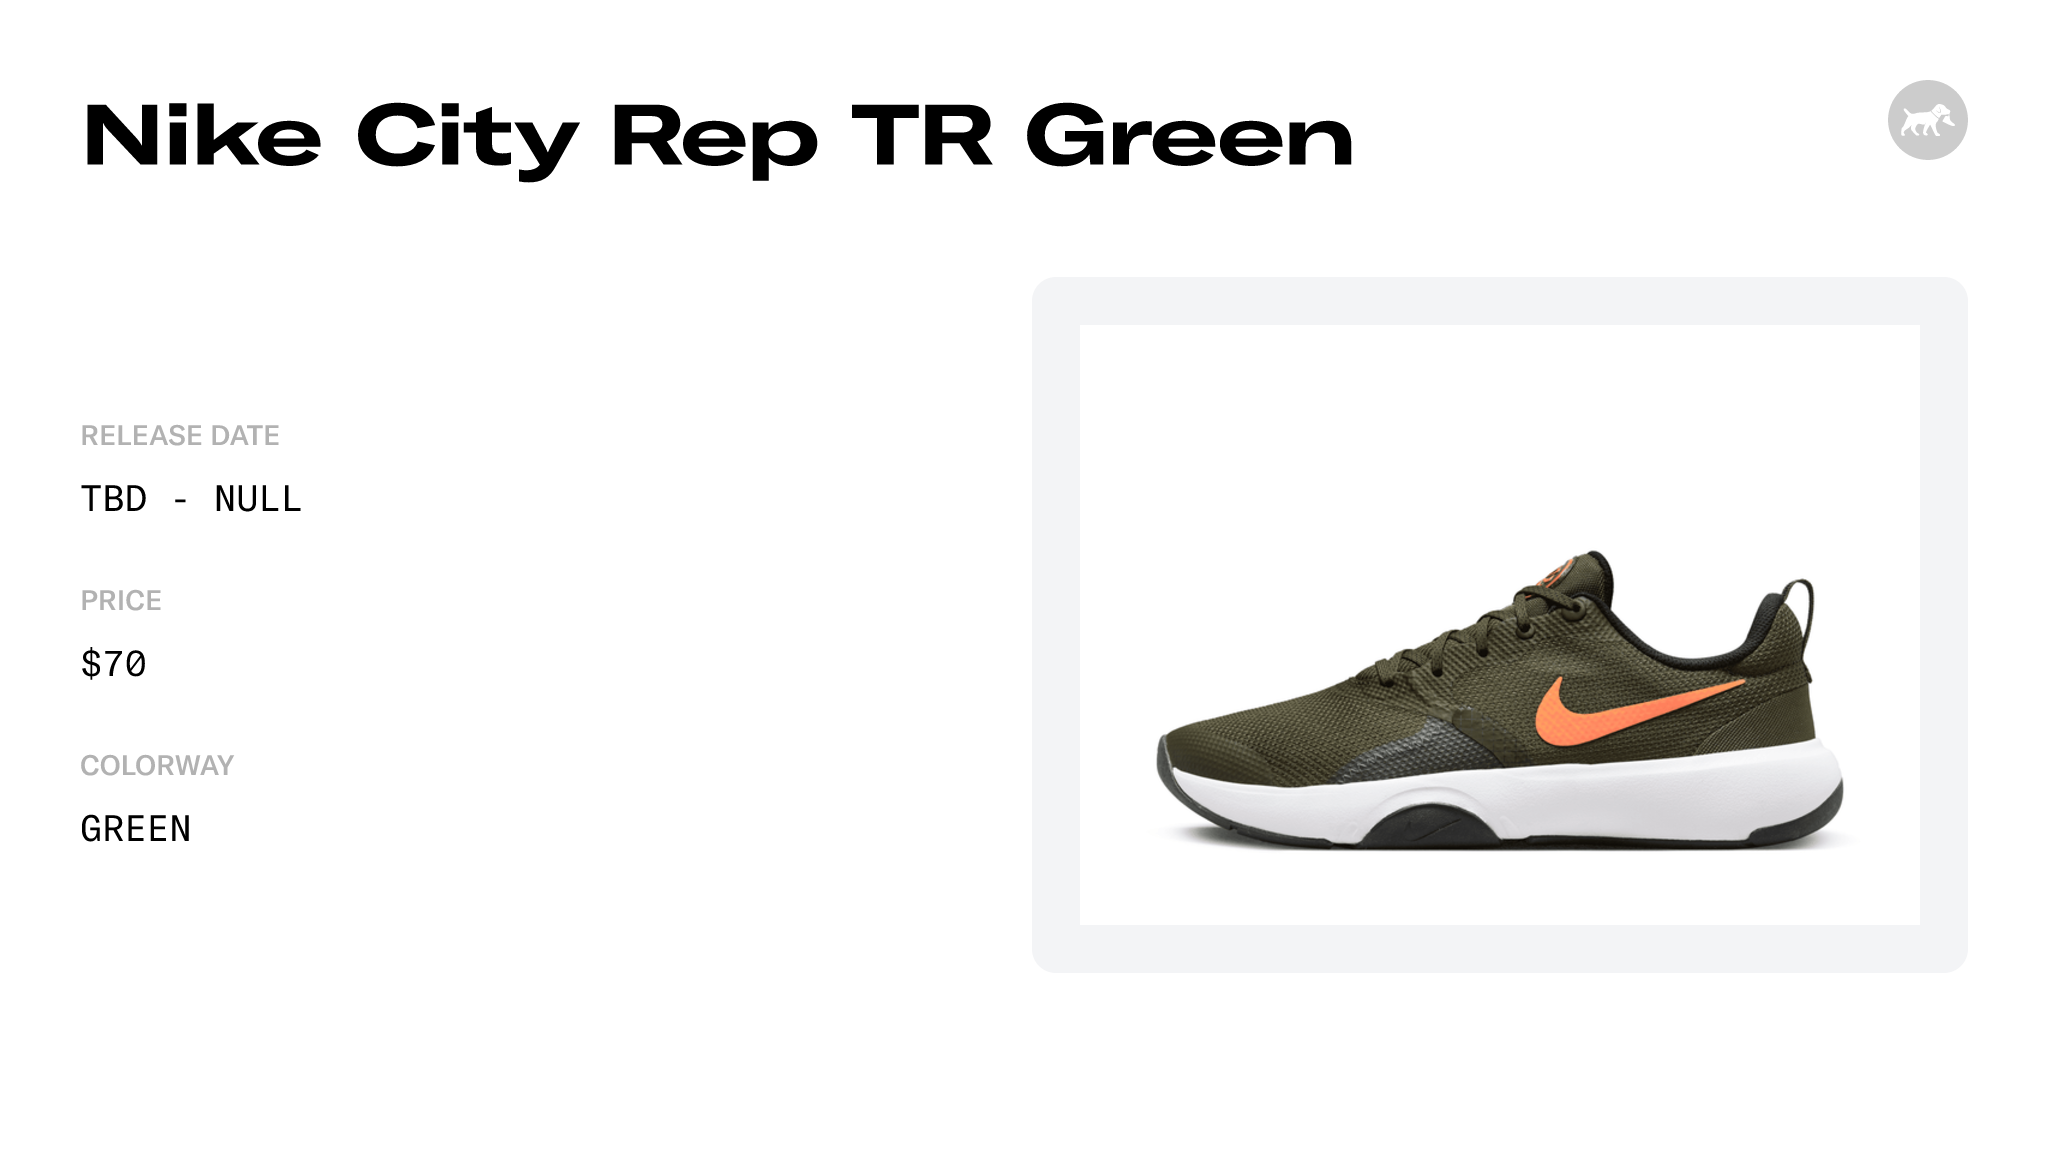 Nike City Rep TR Green - DA1352-300 Raffles and Release Date